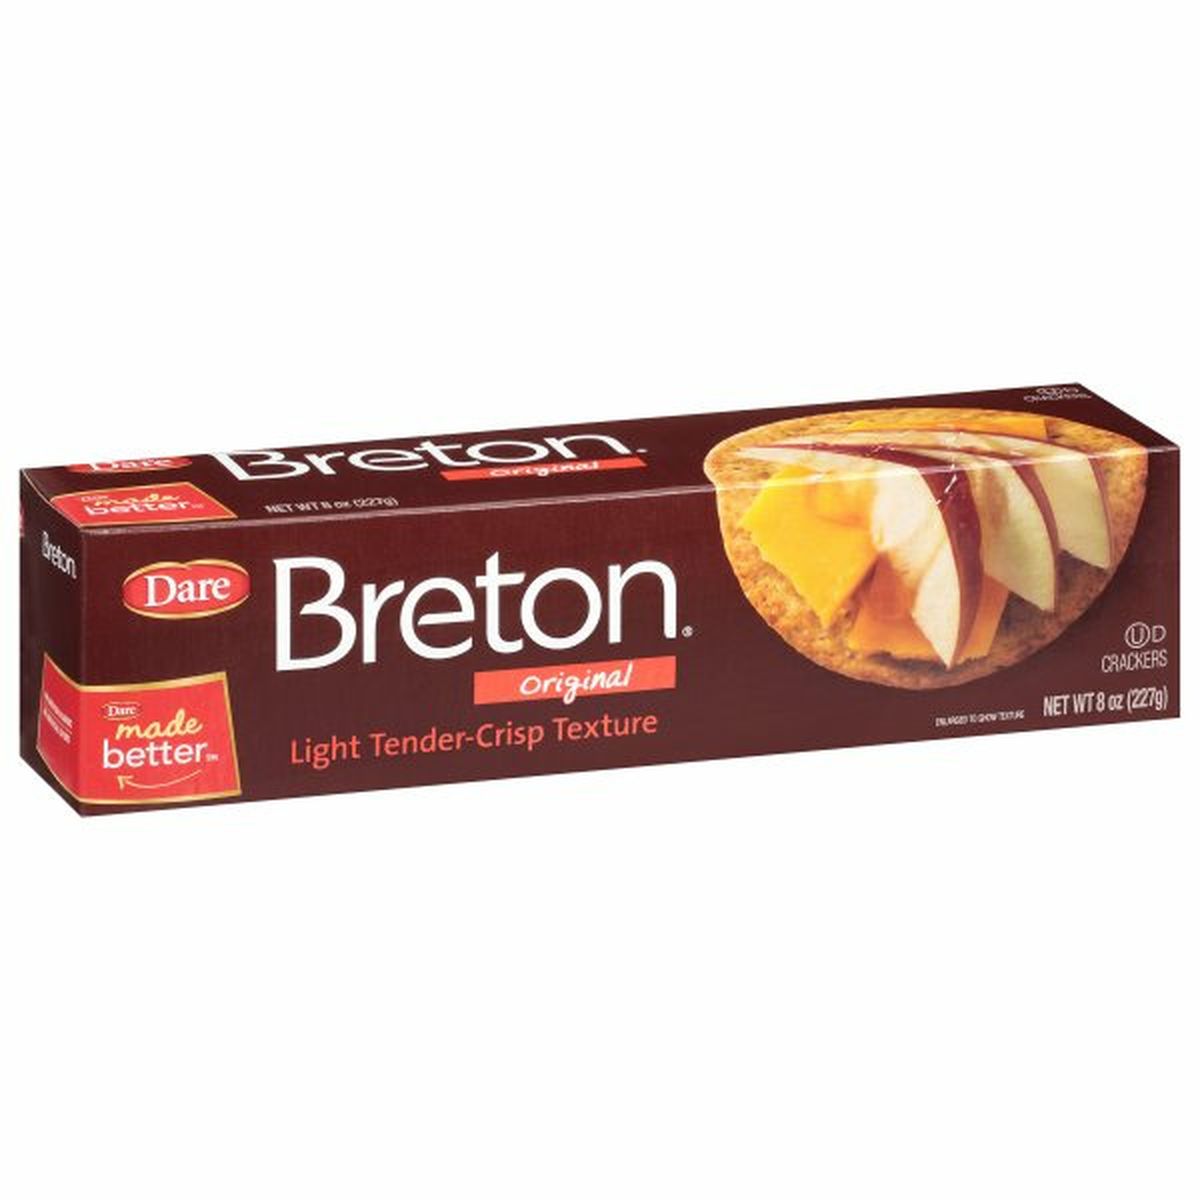 Calories in Dare Breton Crackers, Original